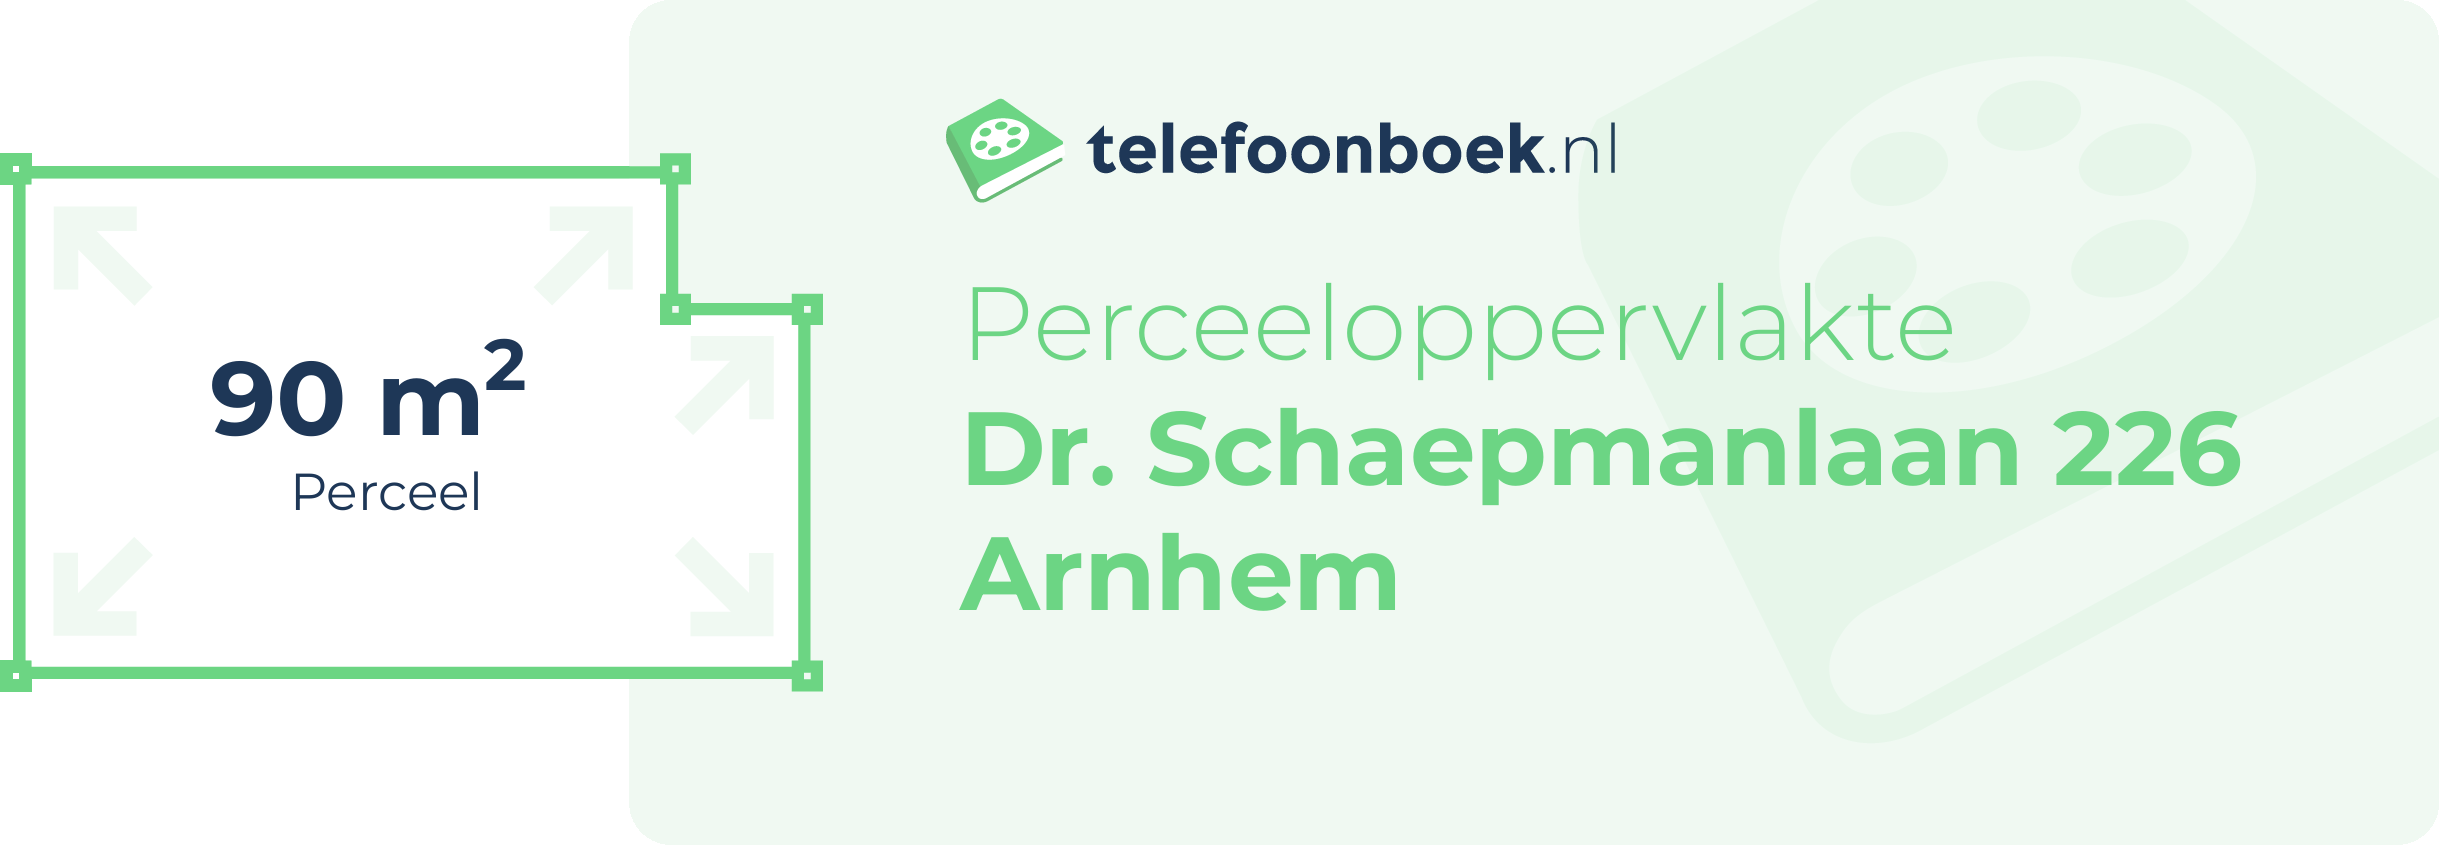 Perceeloppervlakte Dr. Schaepmanlaan 226 Arnhem